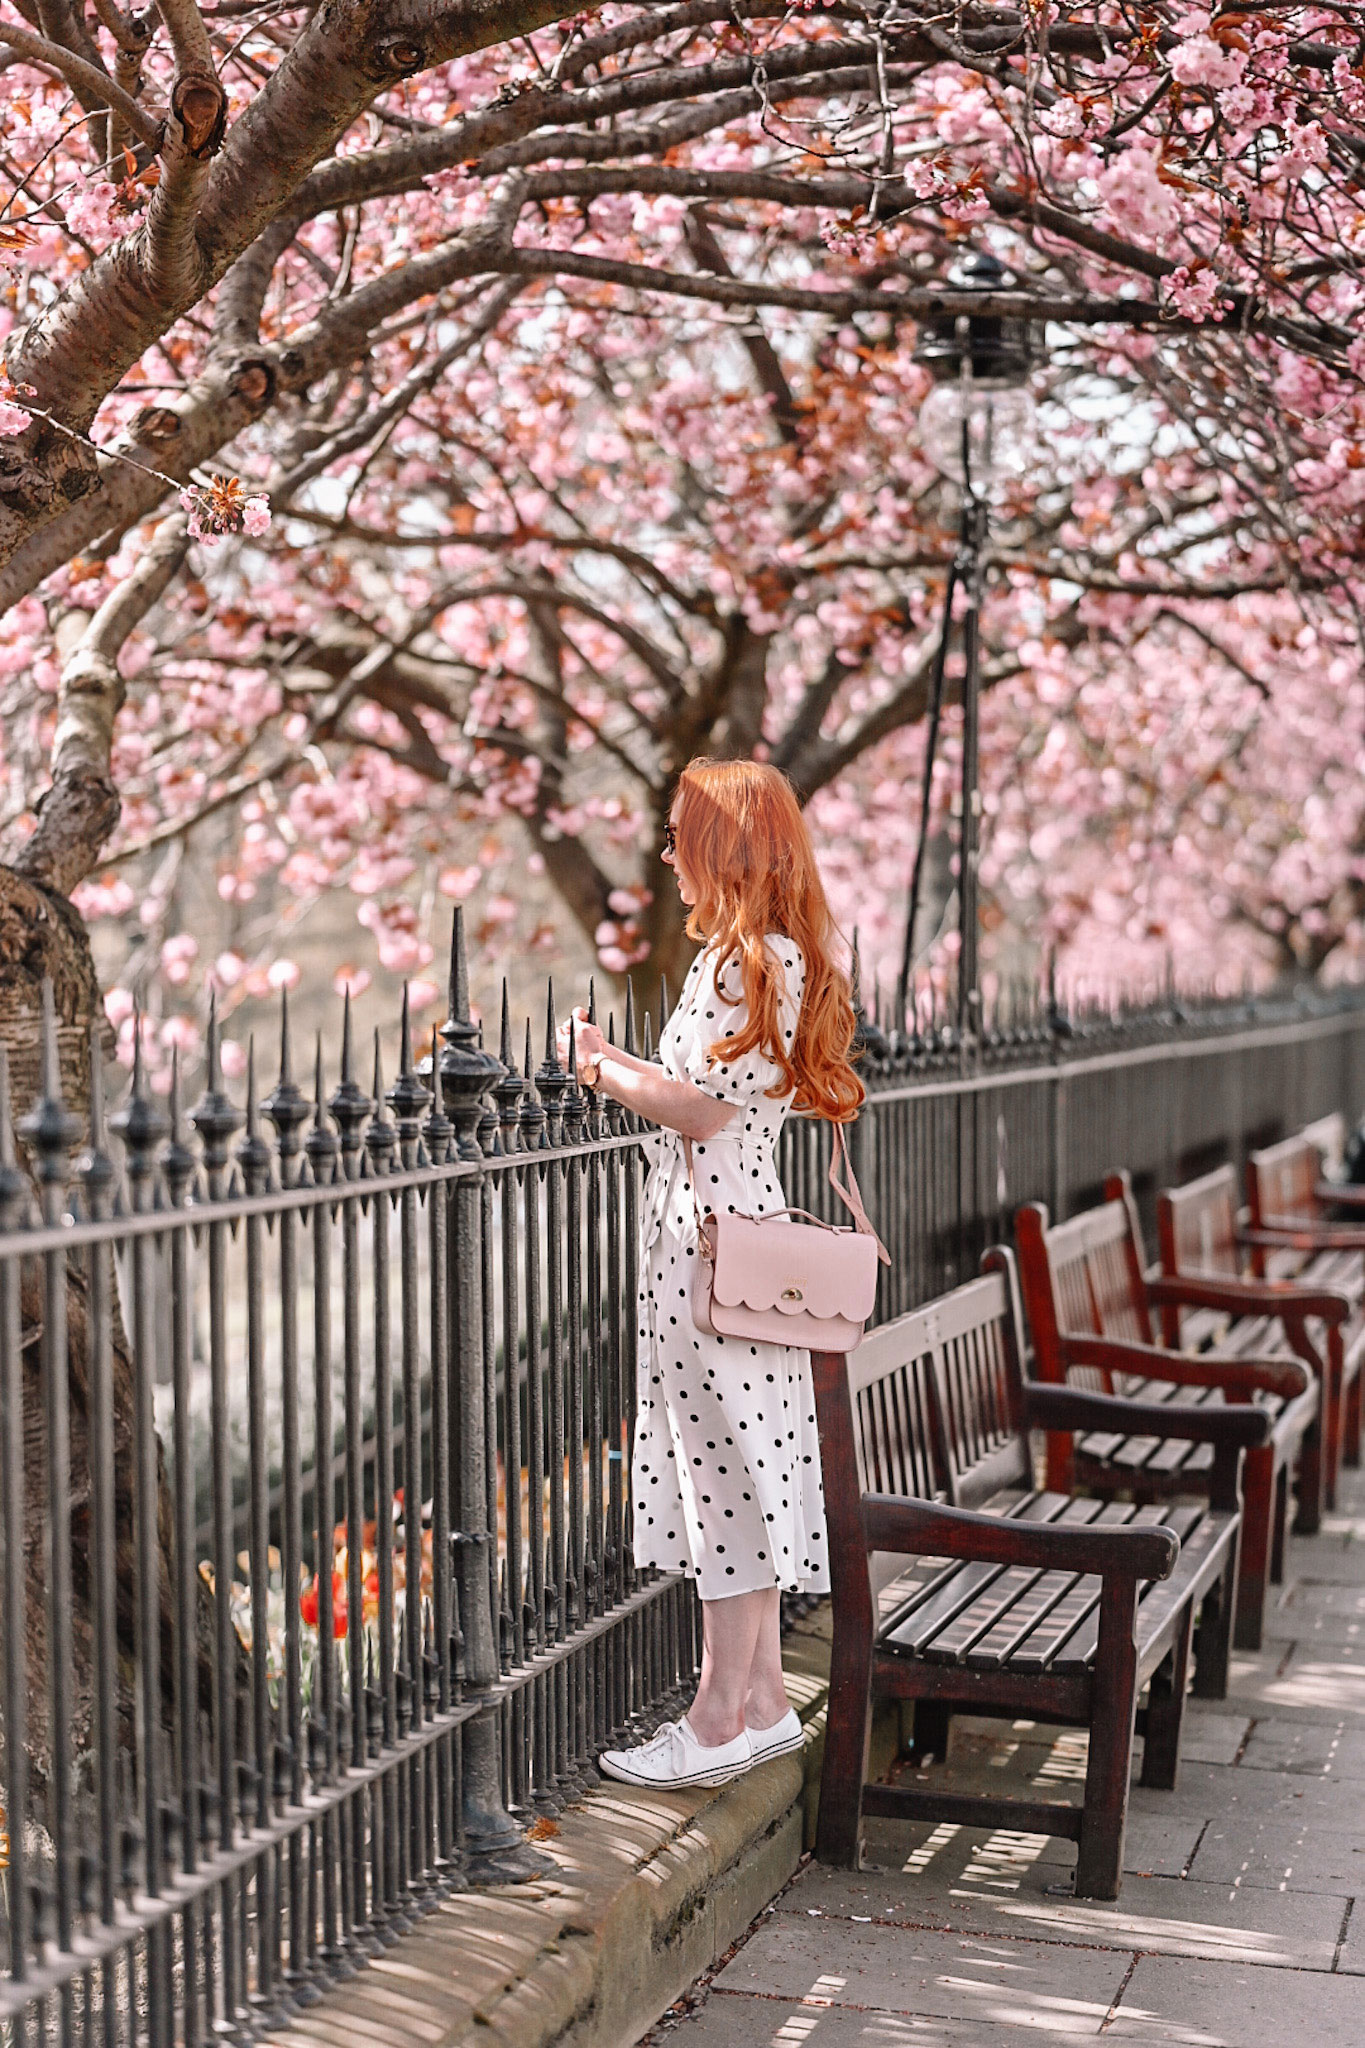 Amber standing underneath the cherry blossom trees on Princes Street in Edinburgh